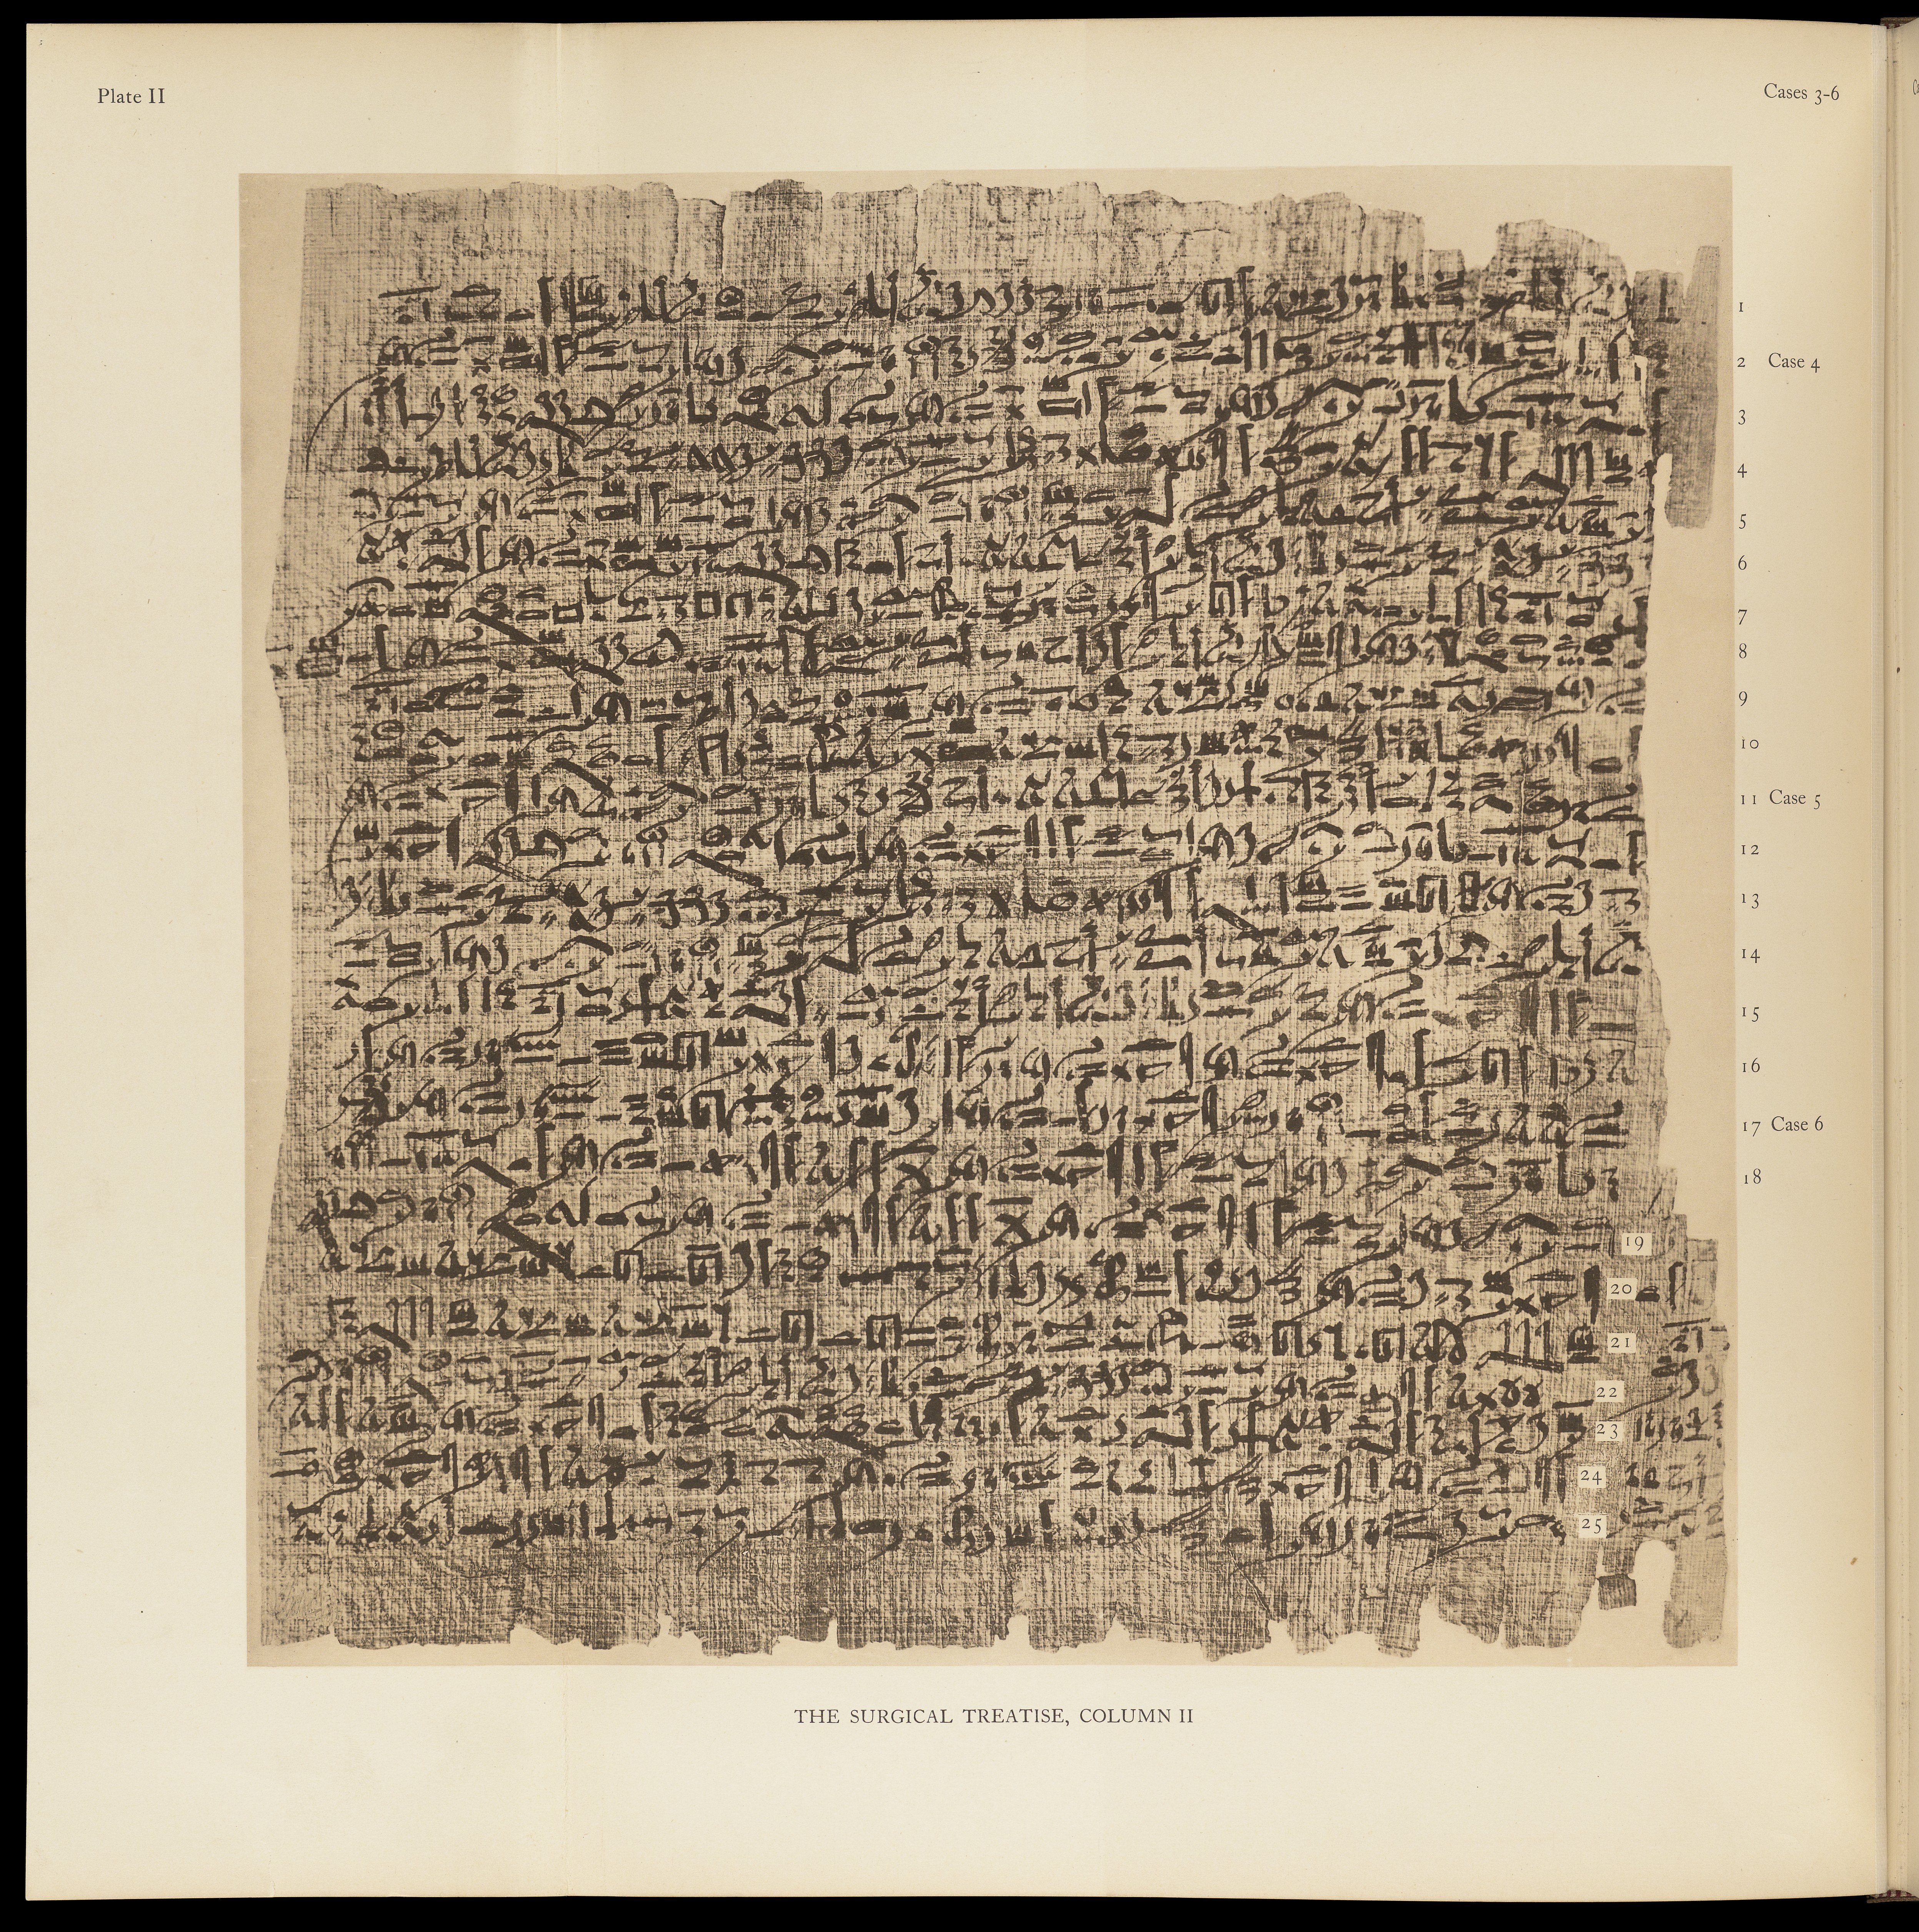 Edwin Smith Papyrus #10